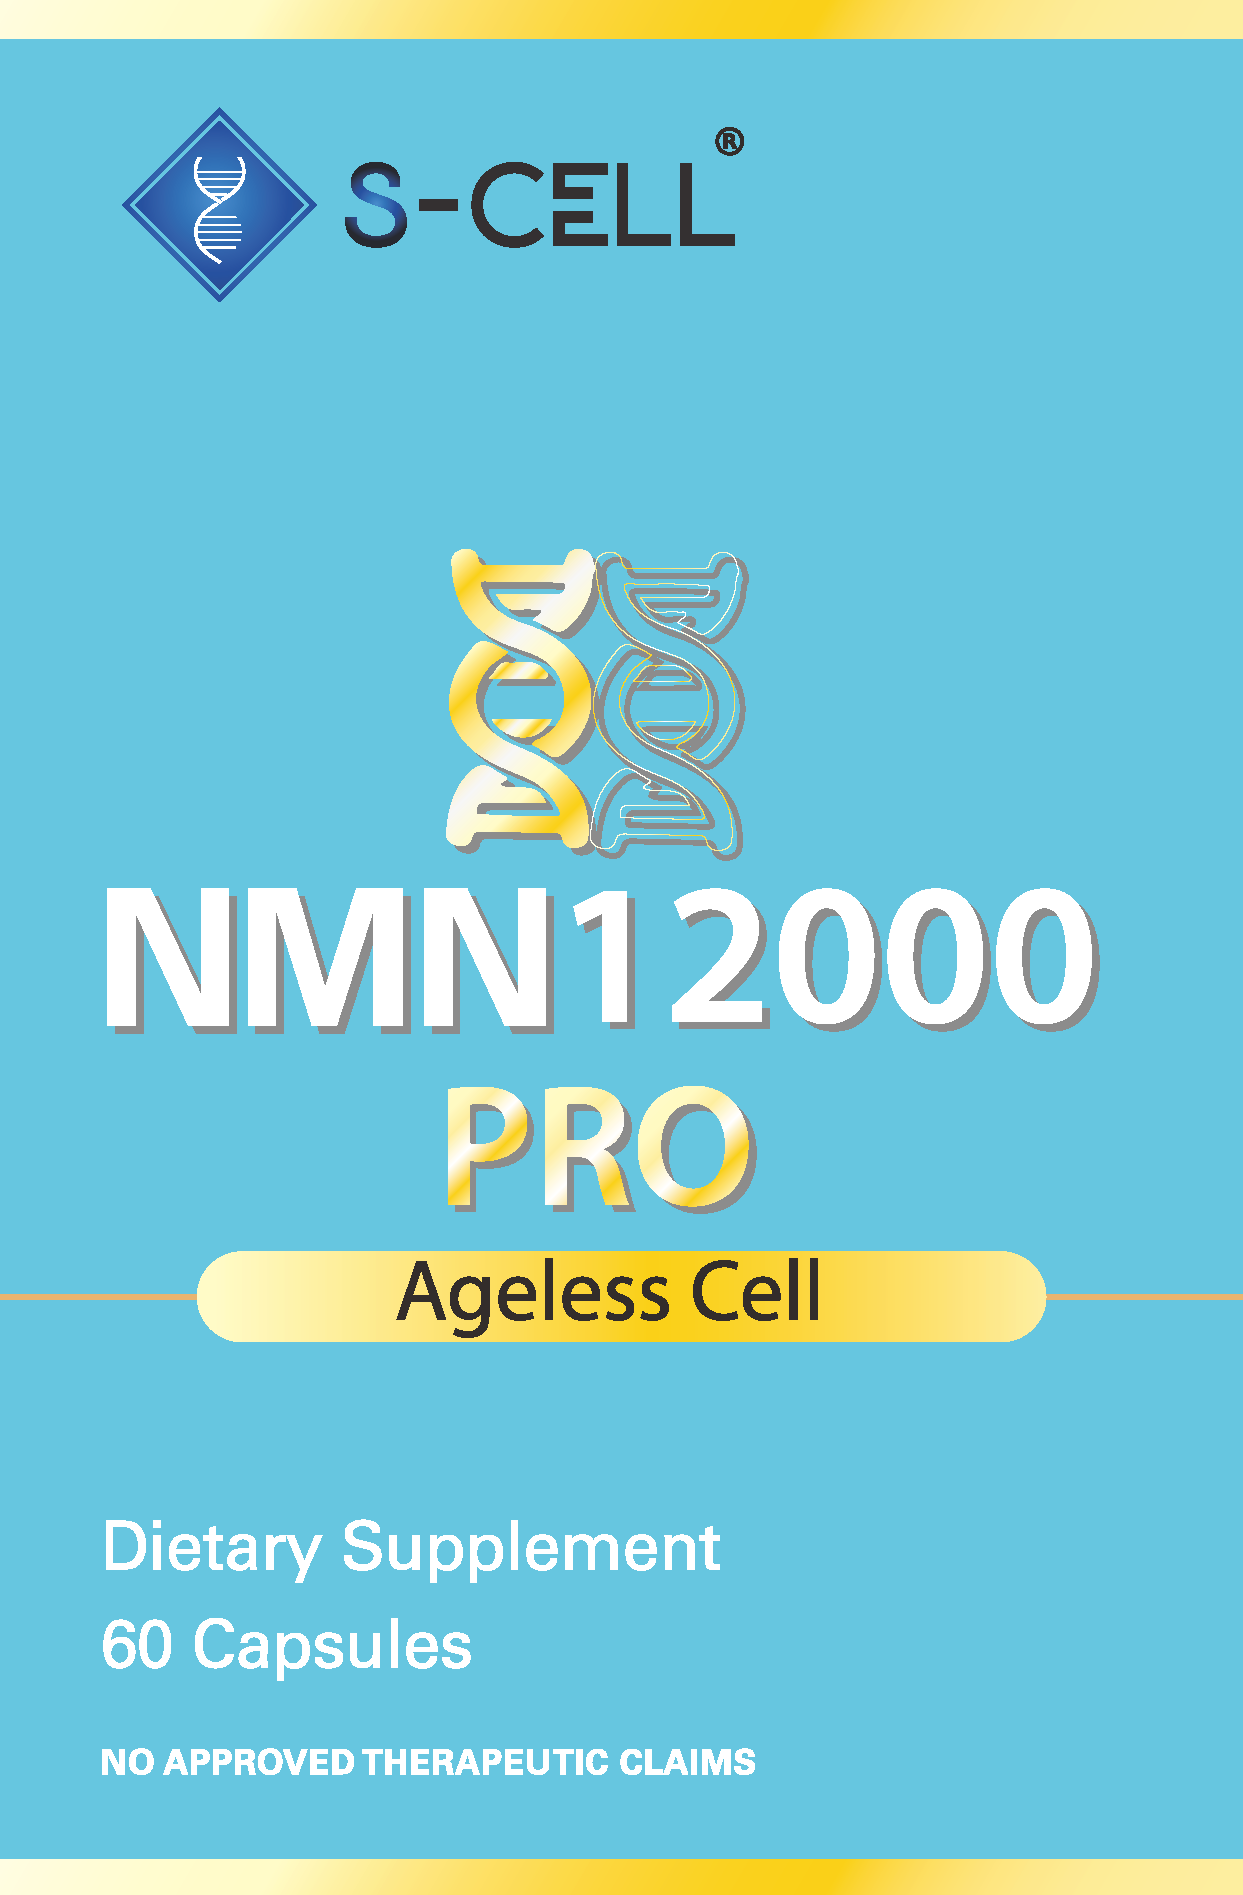 NMN 12000 PRO (母親節優惠)